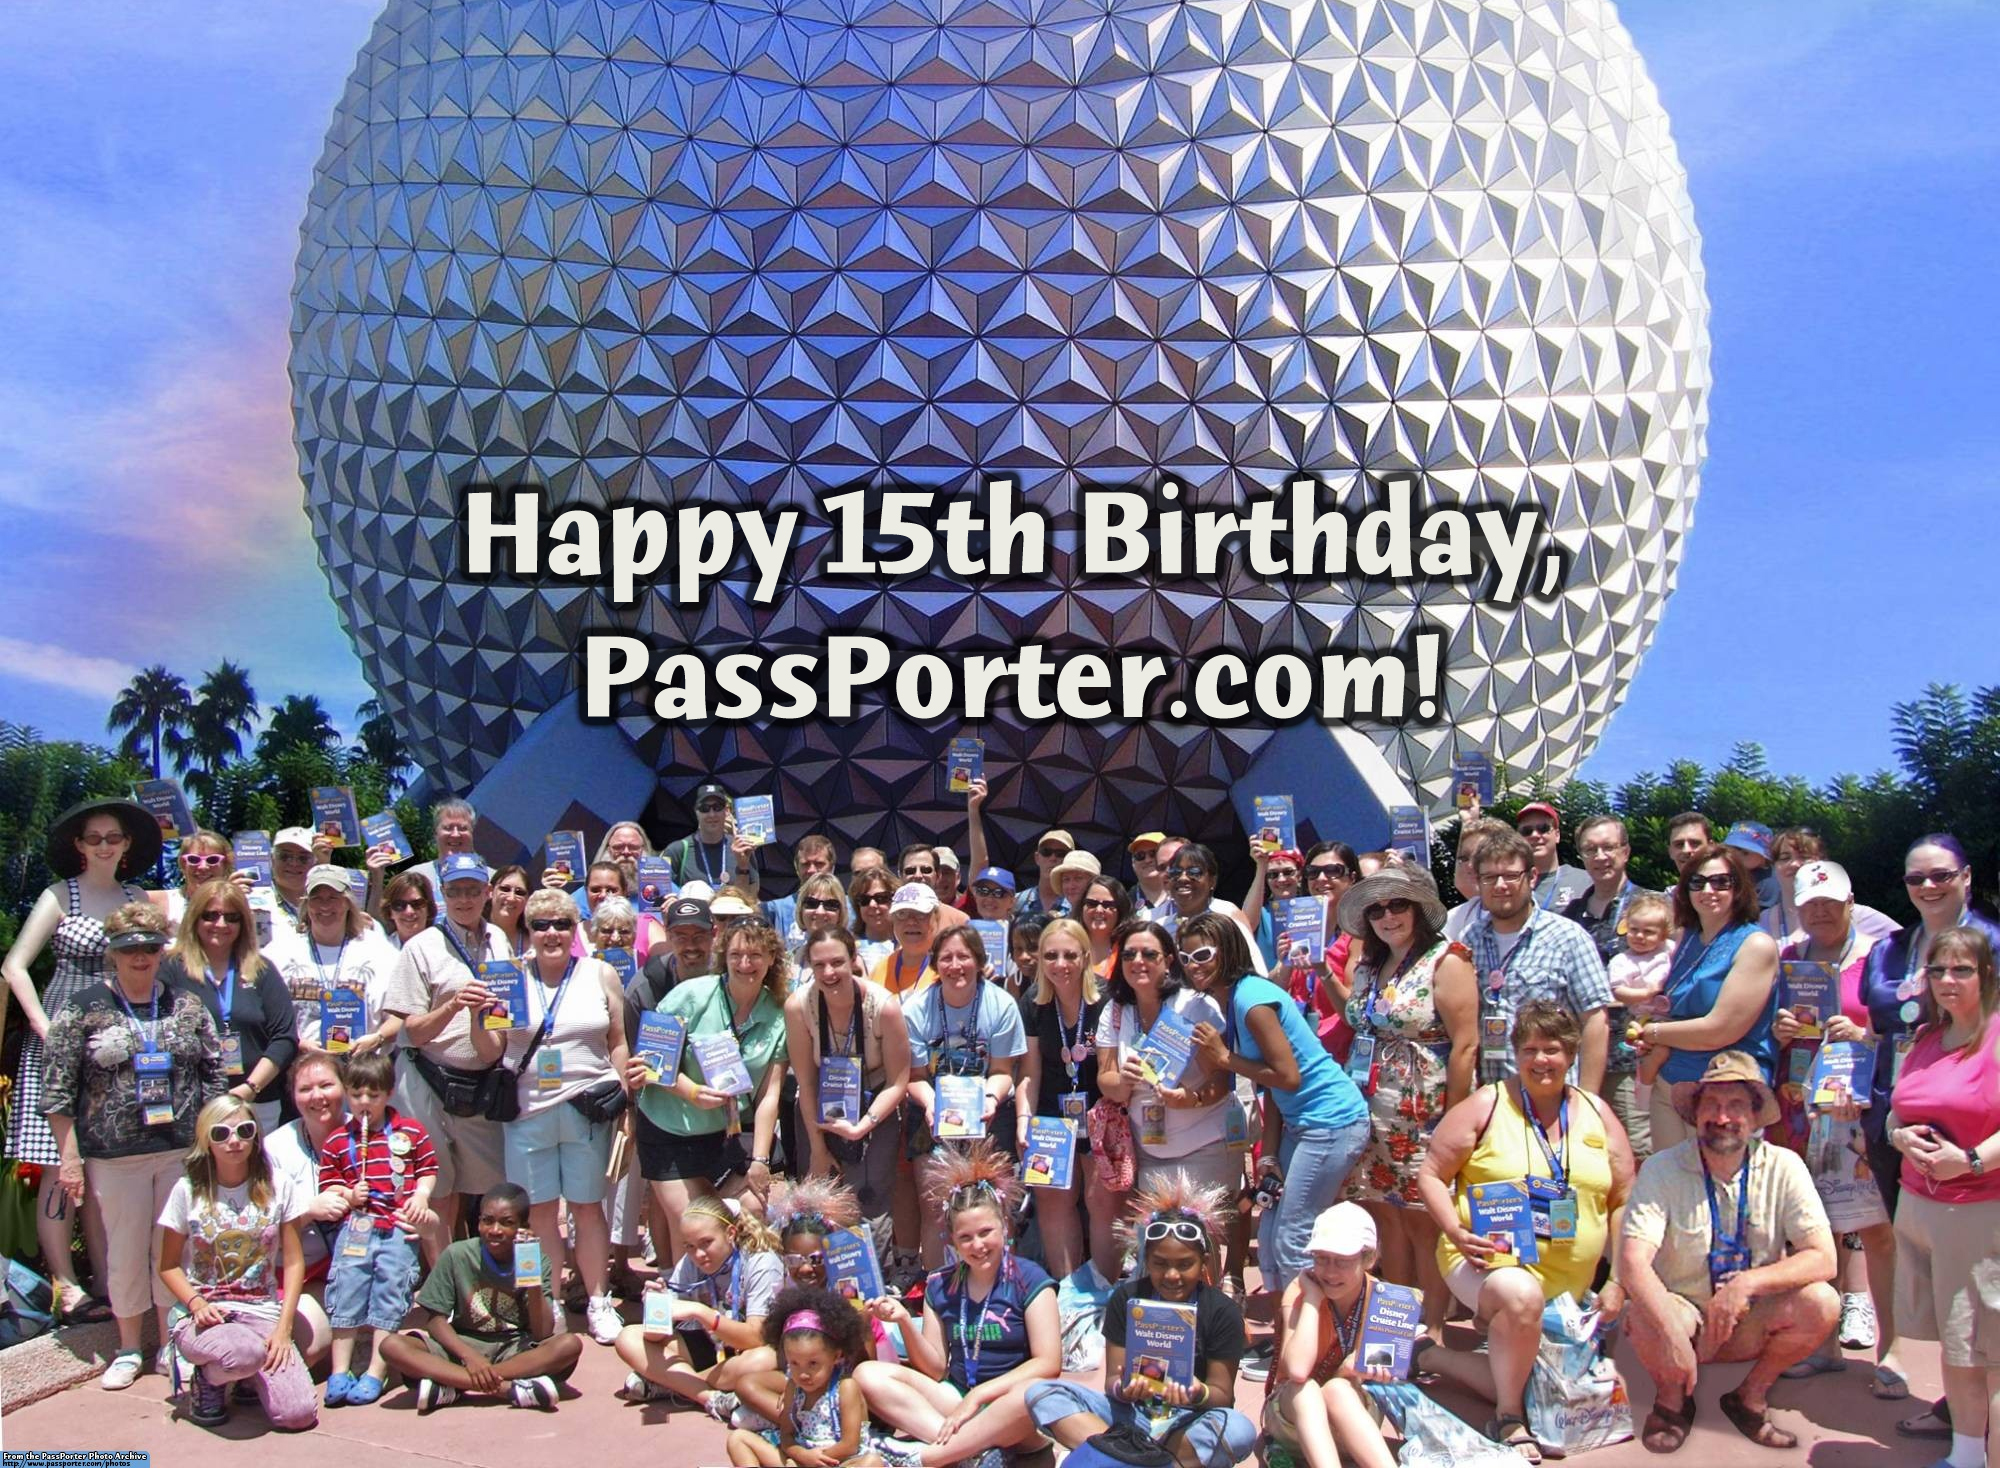 Happy 15th Birthday, PassPorter.com